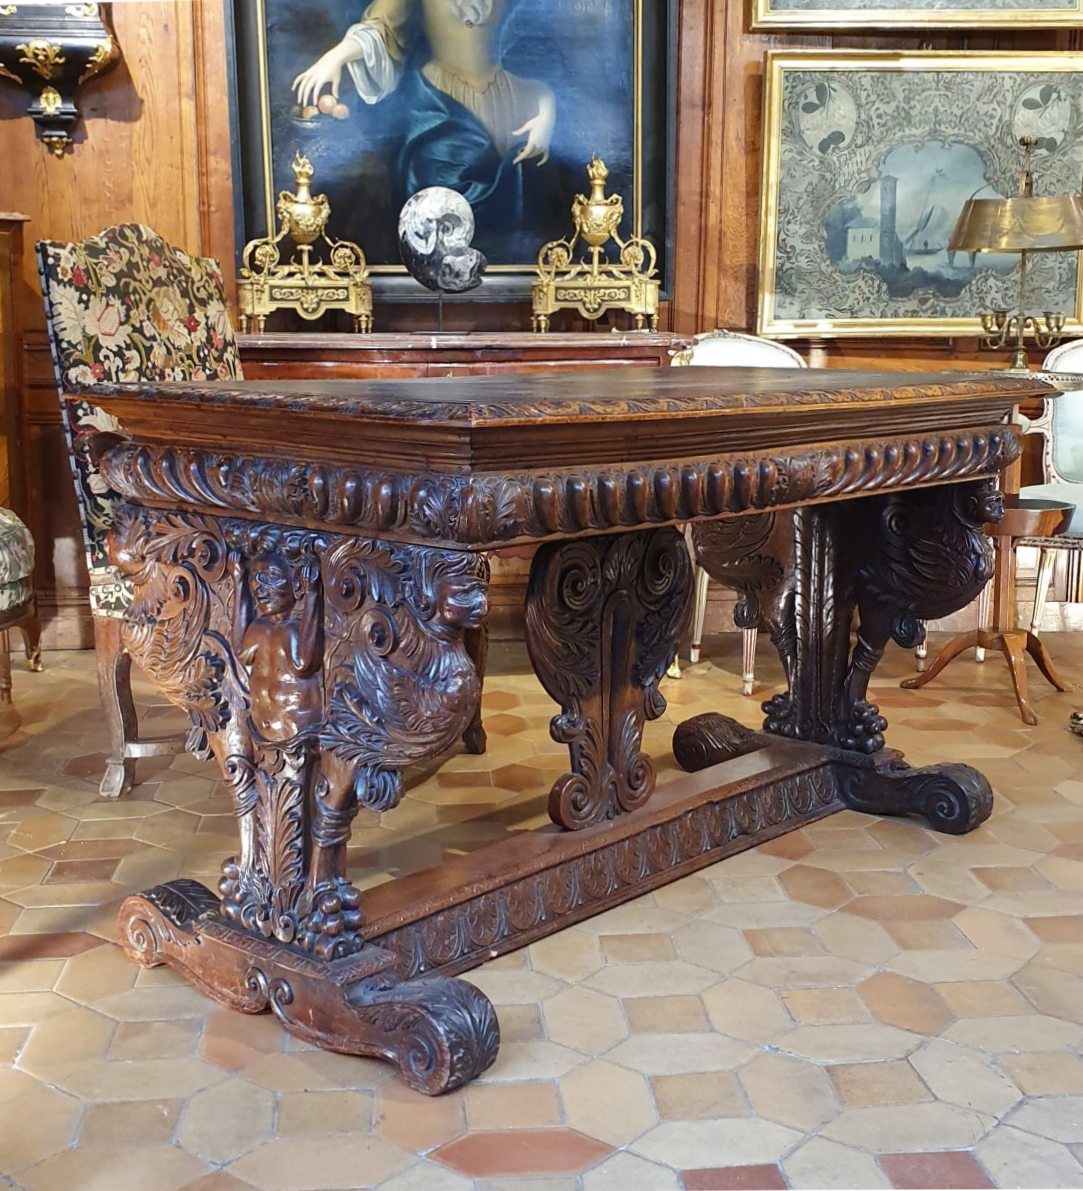 Italian, Renaissance style refectory table